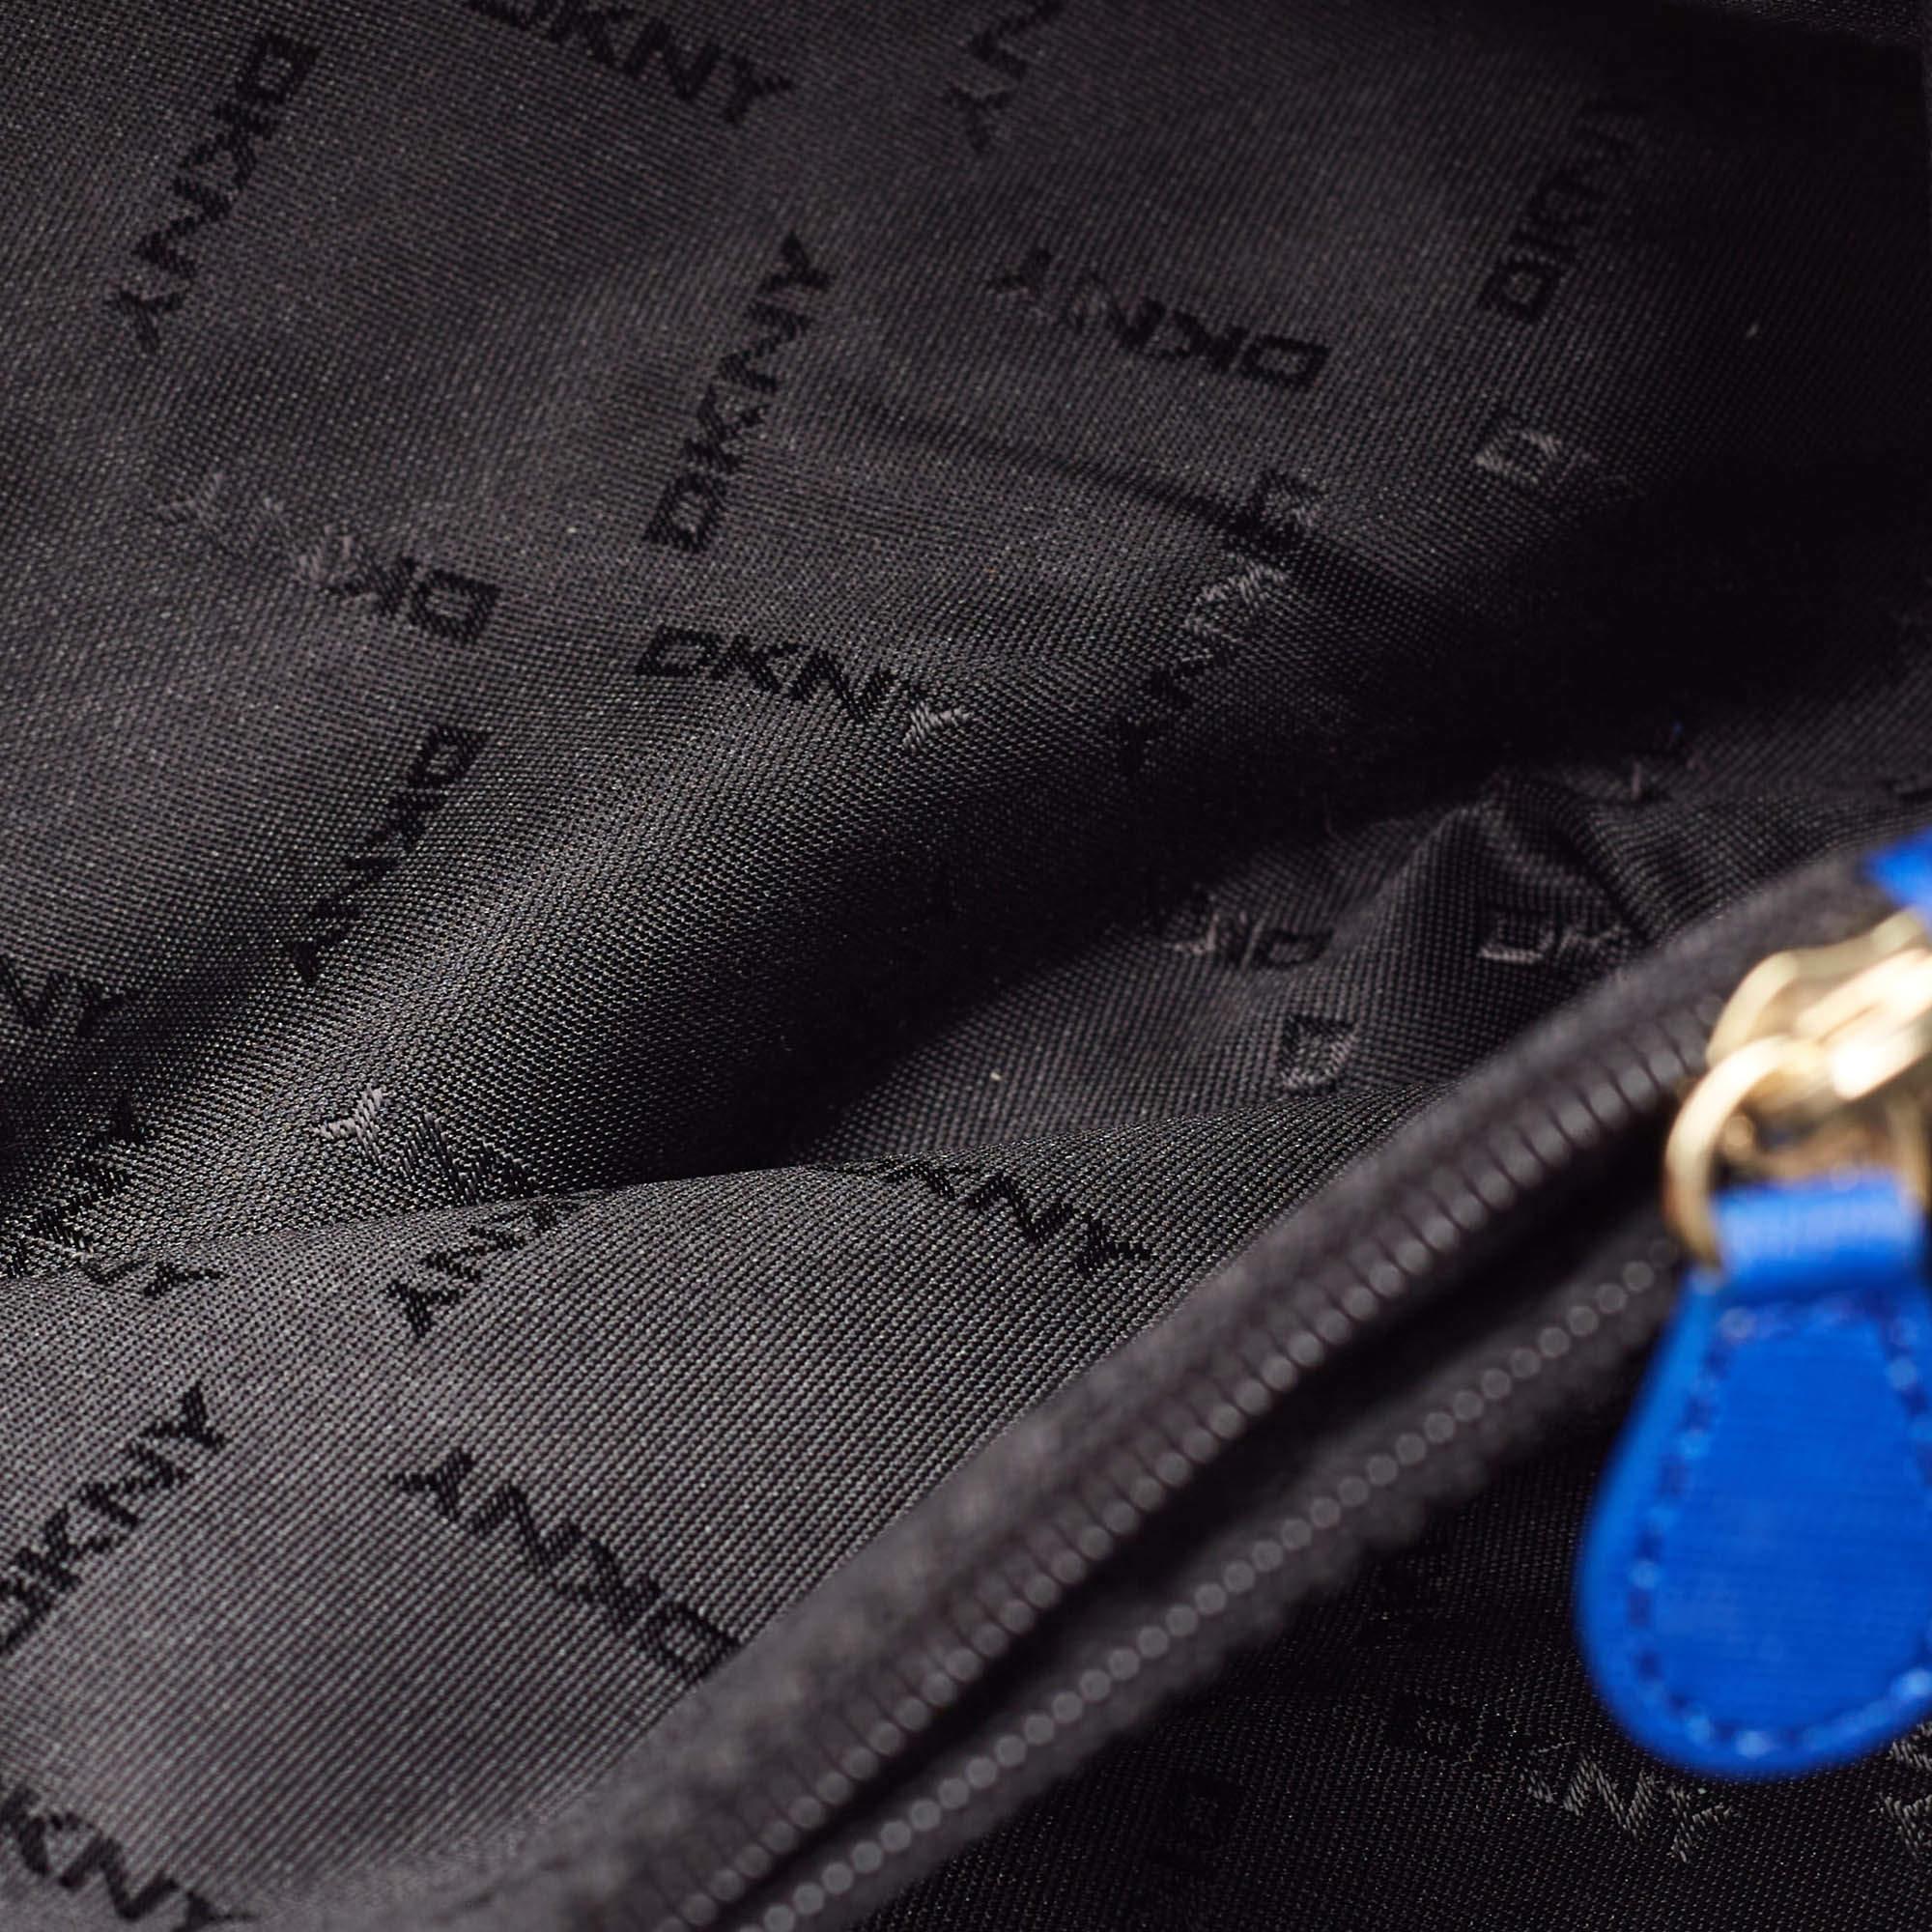 Dkny Blue Saffiano Leather Dome Shoulder Bag 3